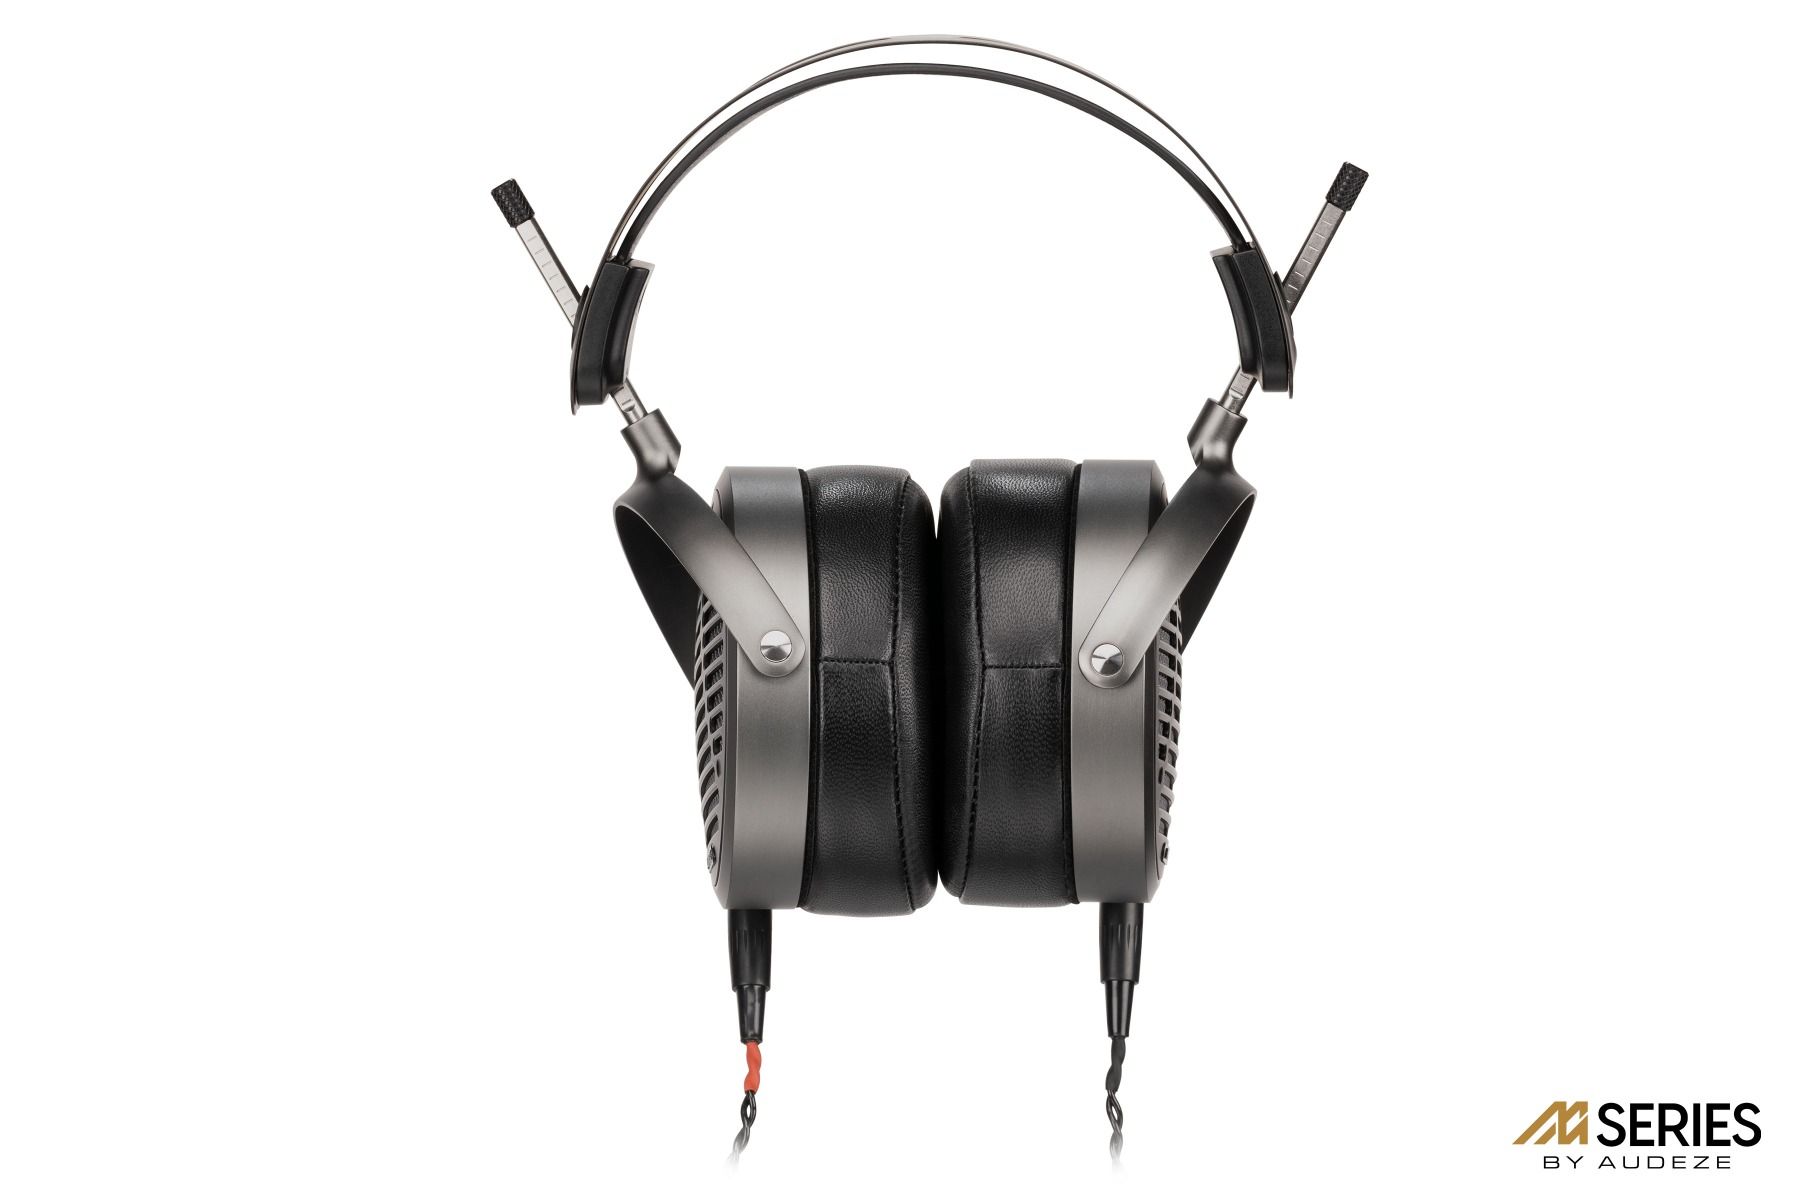 Front view of Audeze MM-500 Open-back Planar Magnetic Over-ear headphones in black color.